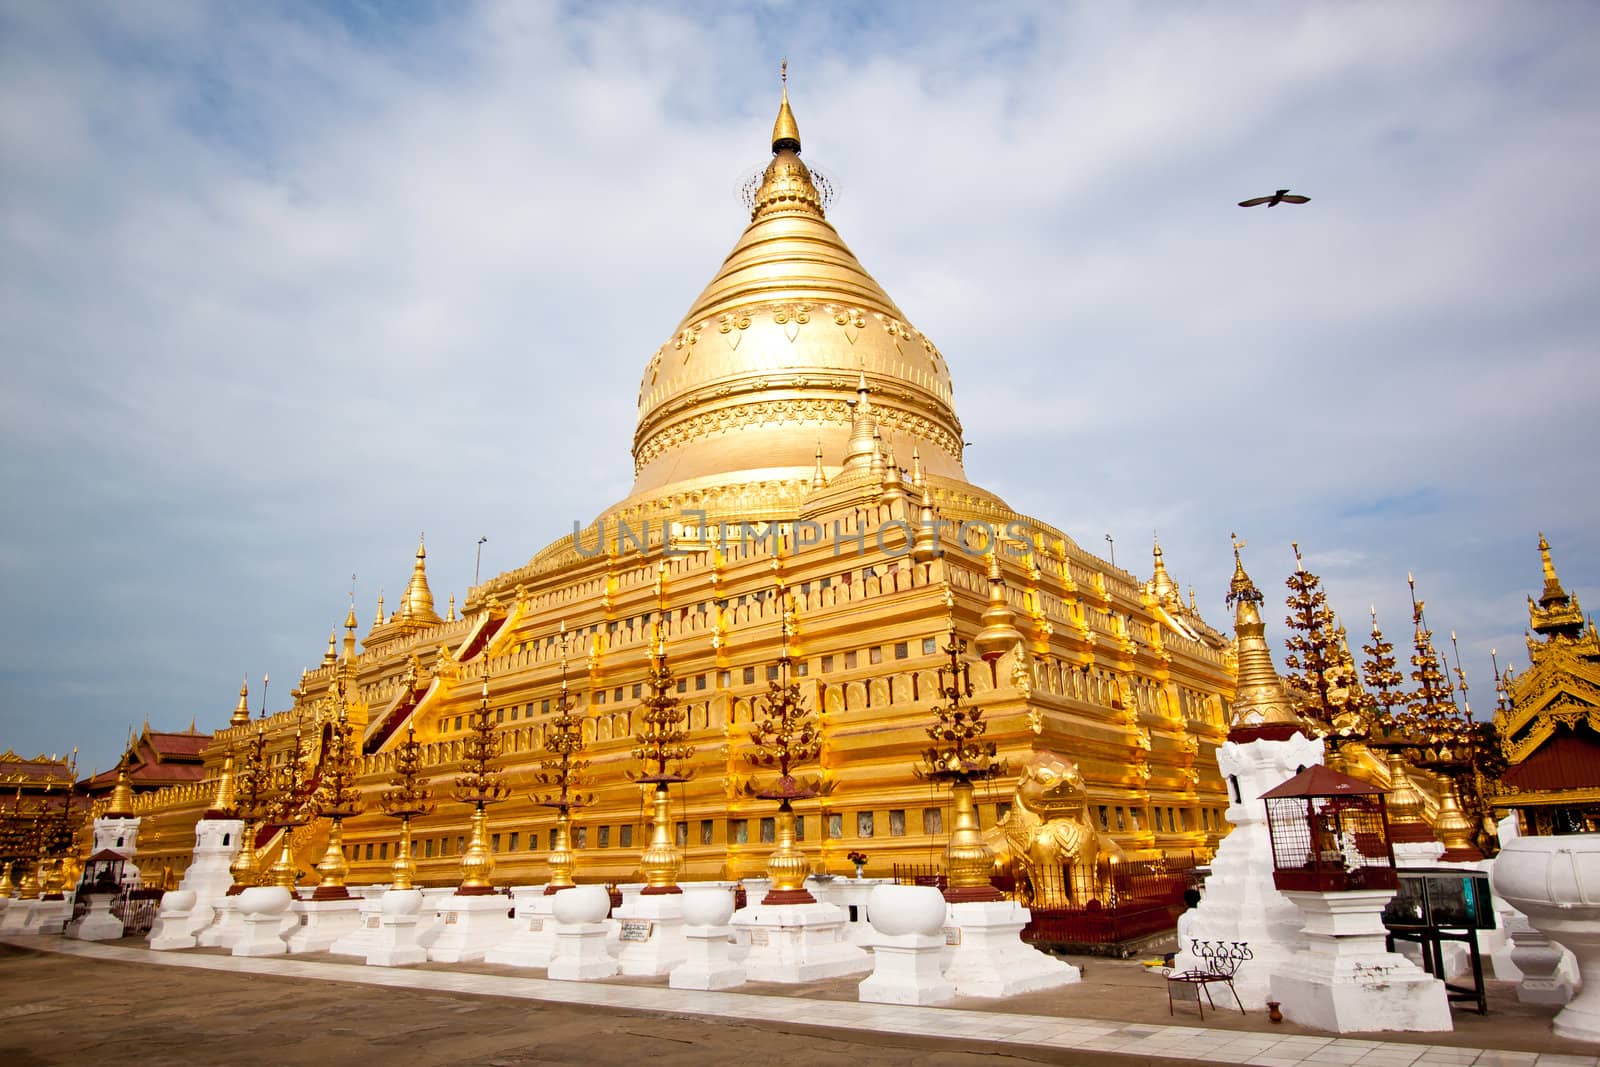 shwezigon paya, the beautiful biggest pagoda in bagan, myanmar